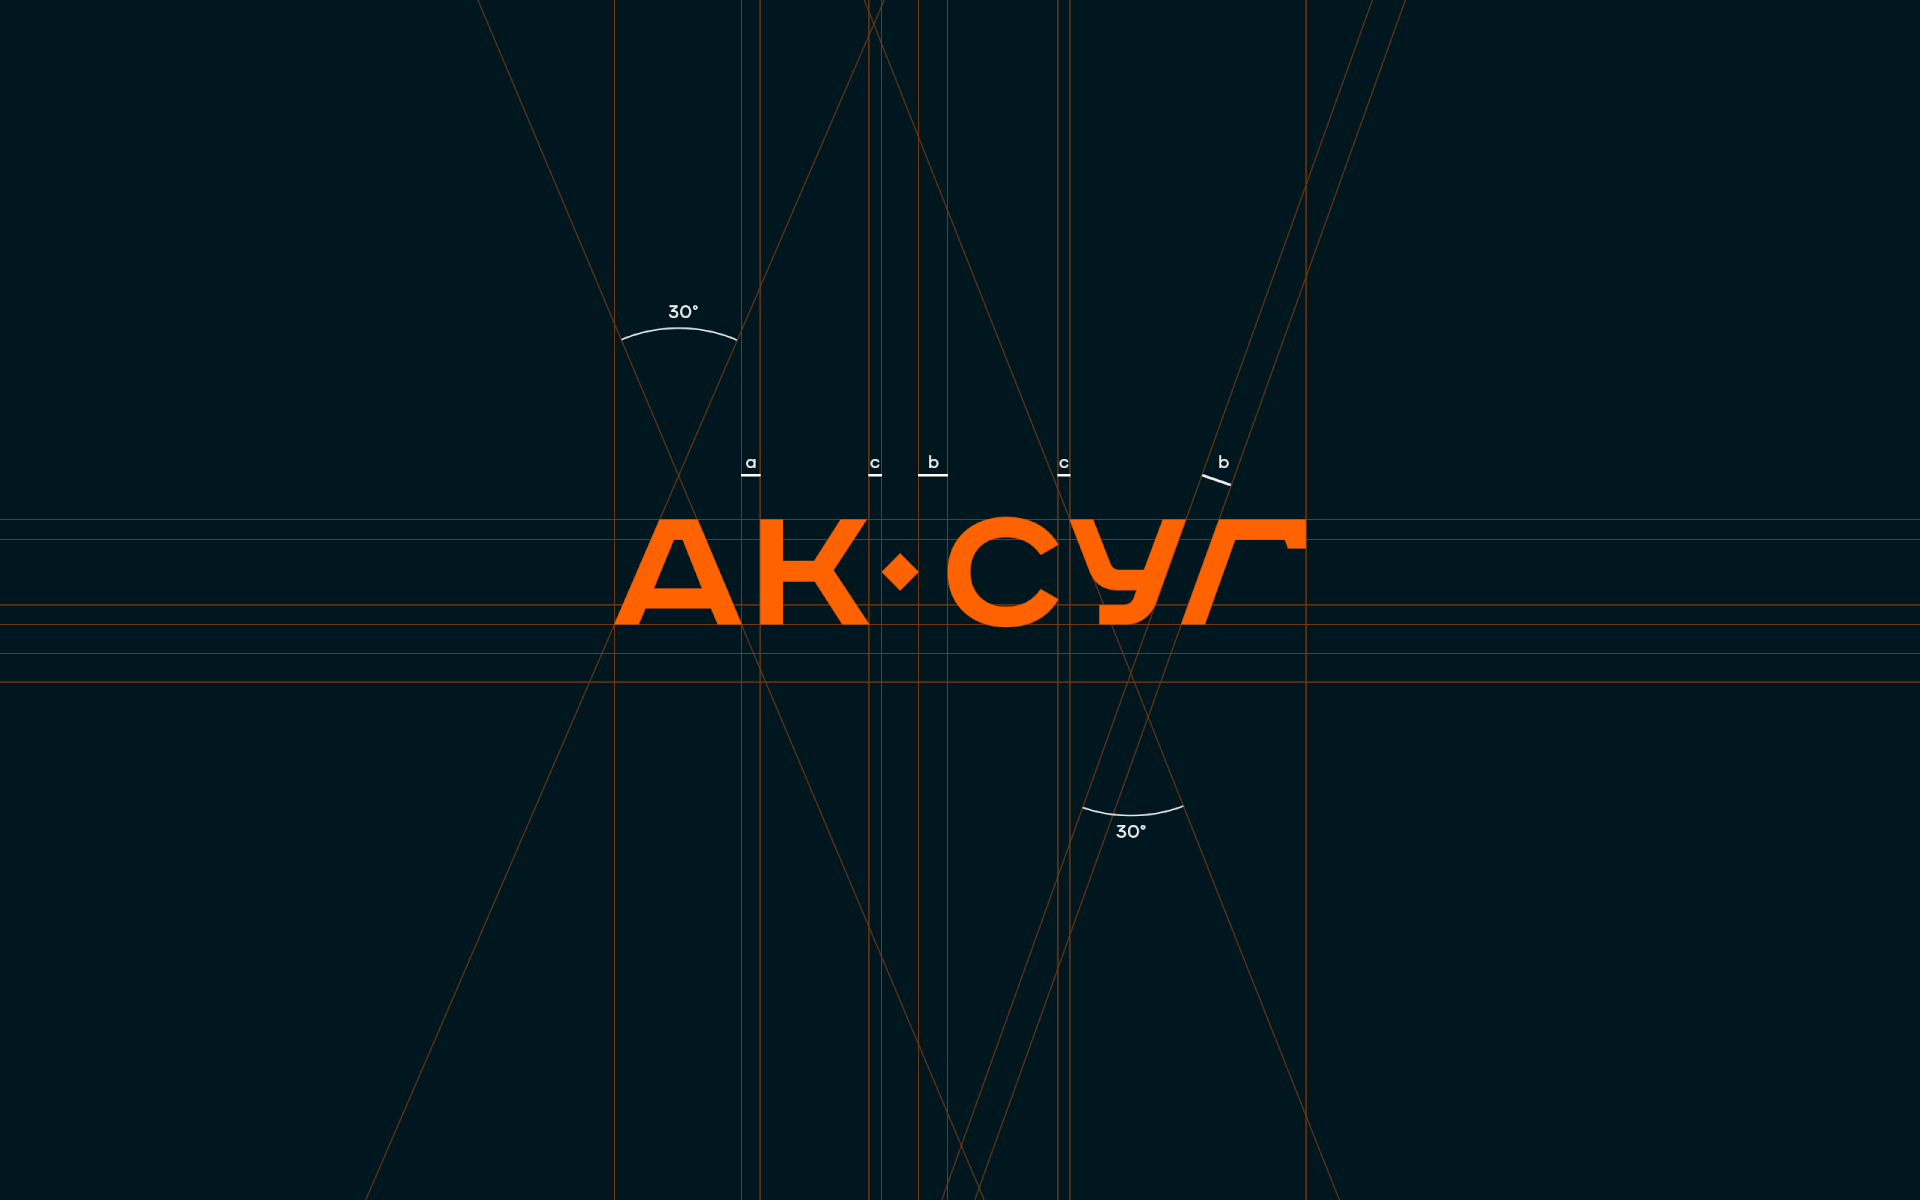 AK-SUG — Изображение №2 — Брендинг, Иллюстрация, Графика на Dprofile